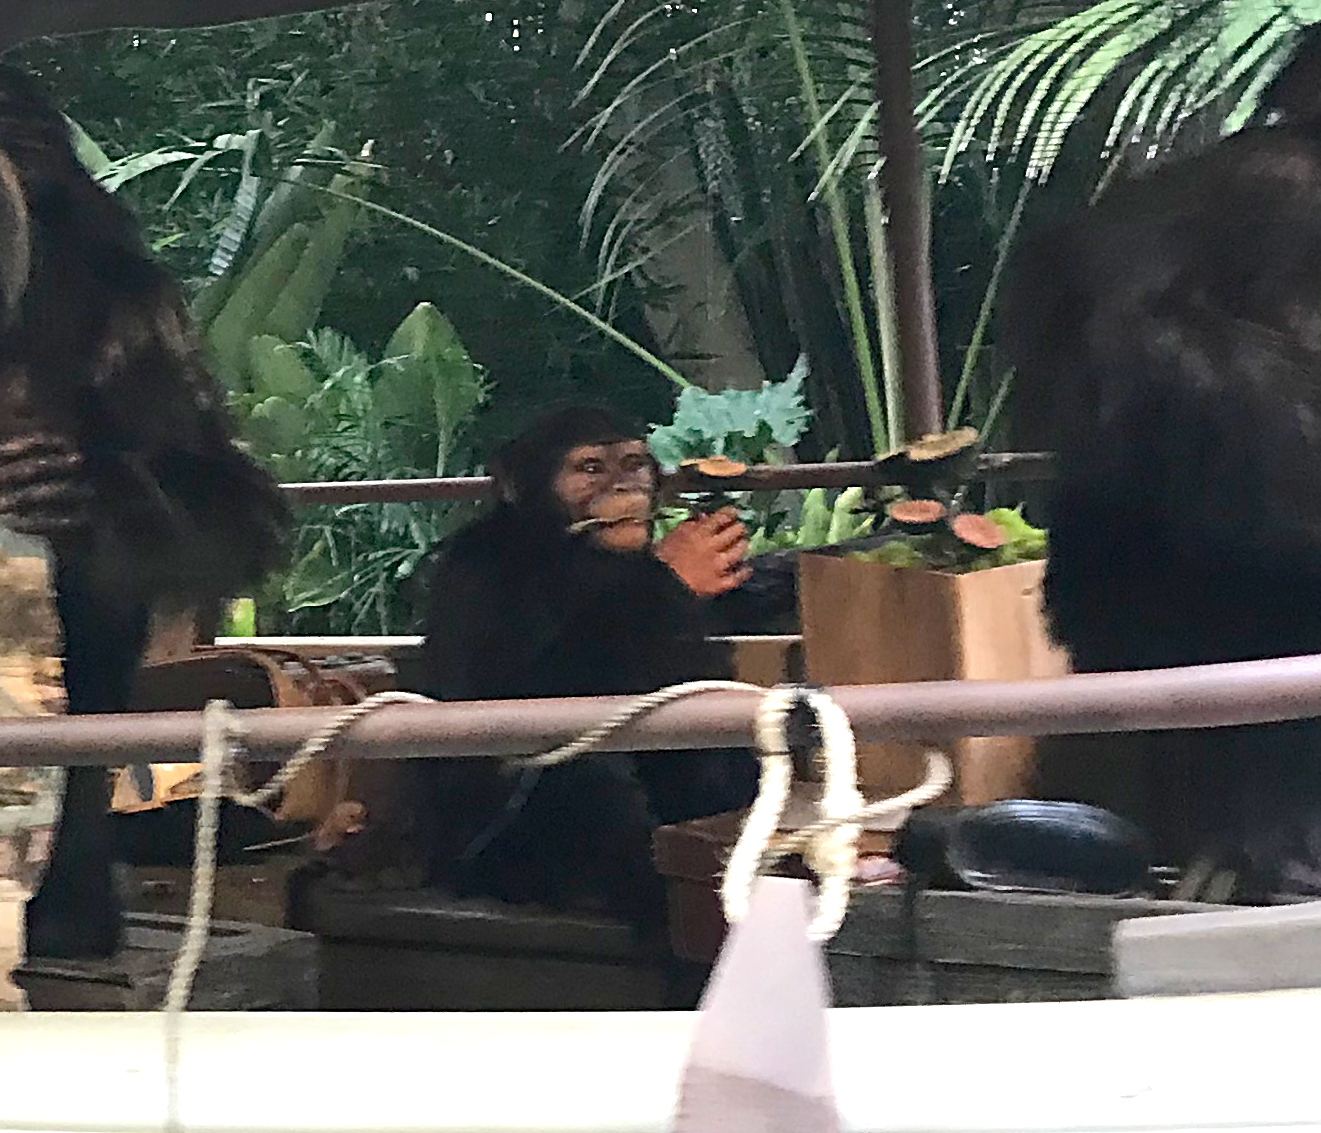 Chimpanzee eating a plant